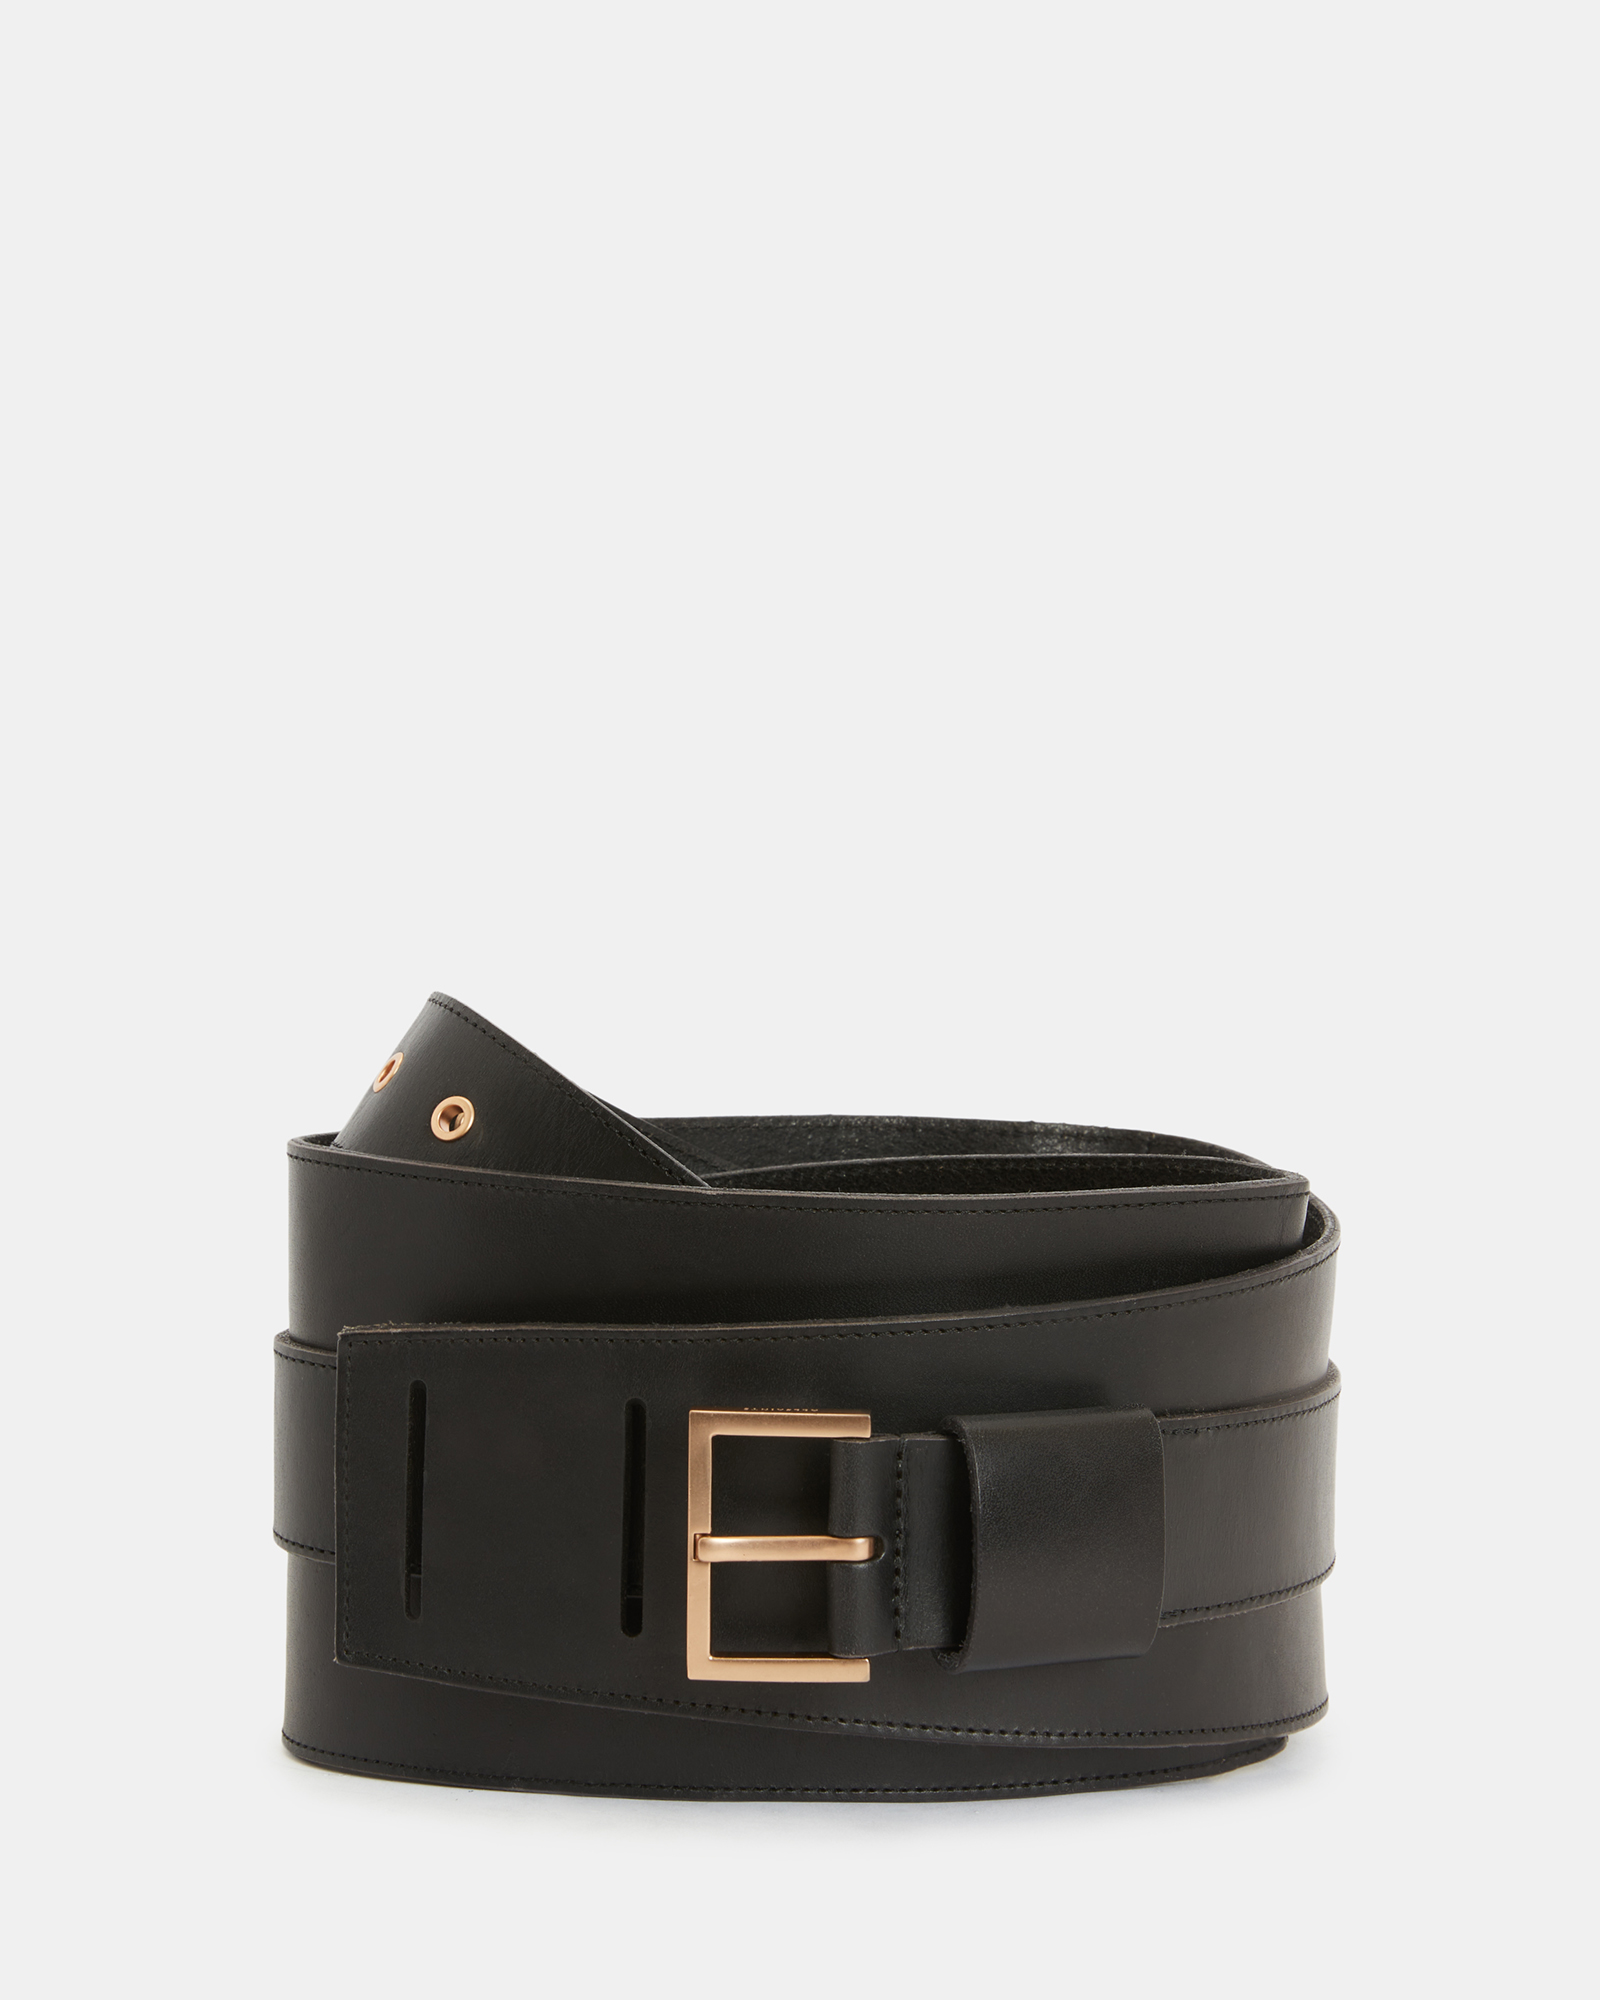 Harlow Leather Waist Belt BLACK/WARM BRASS | ALLSAINTS